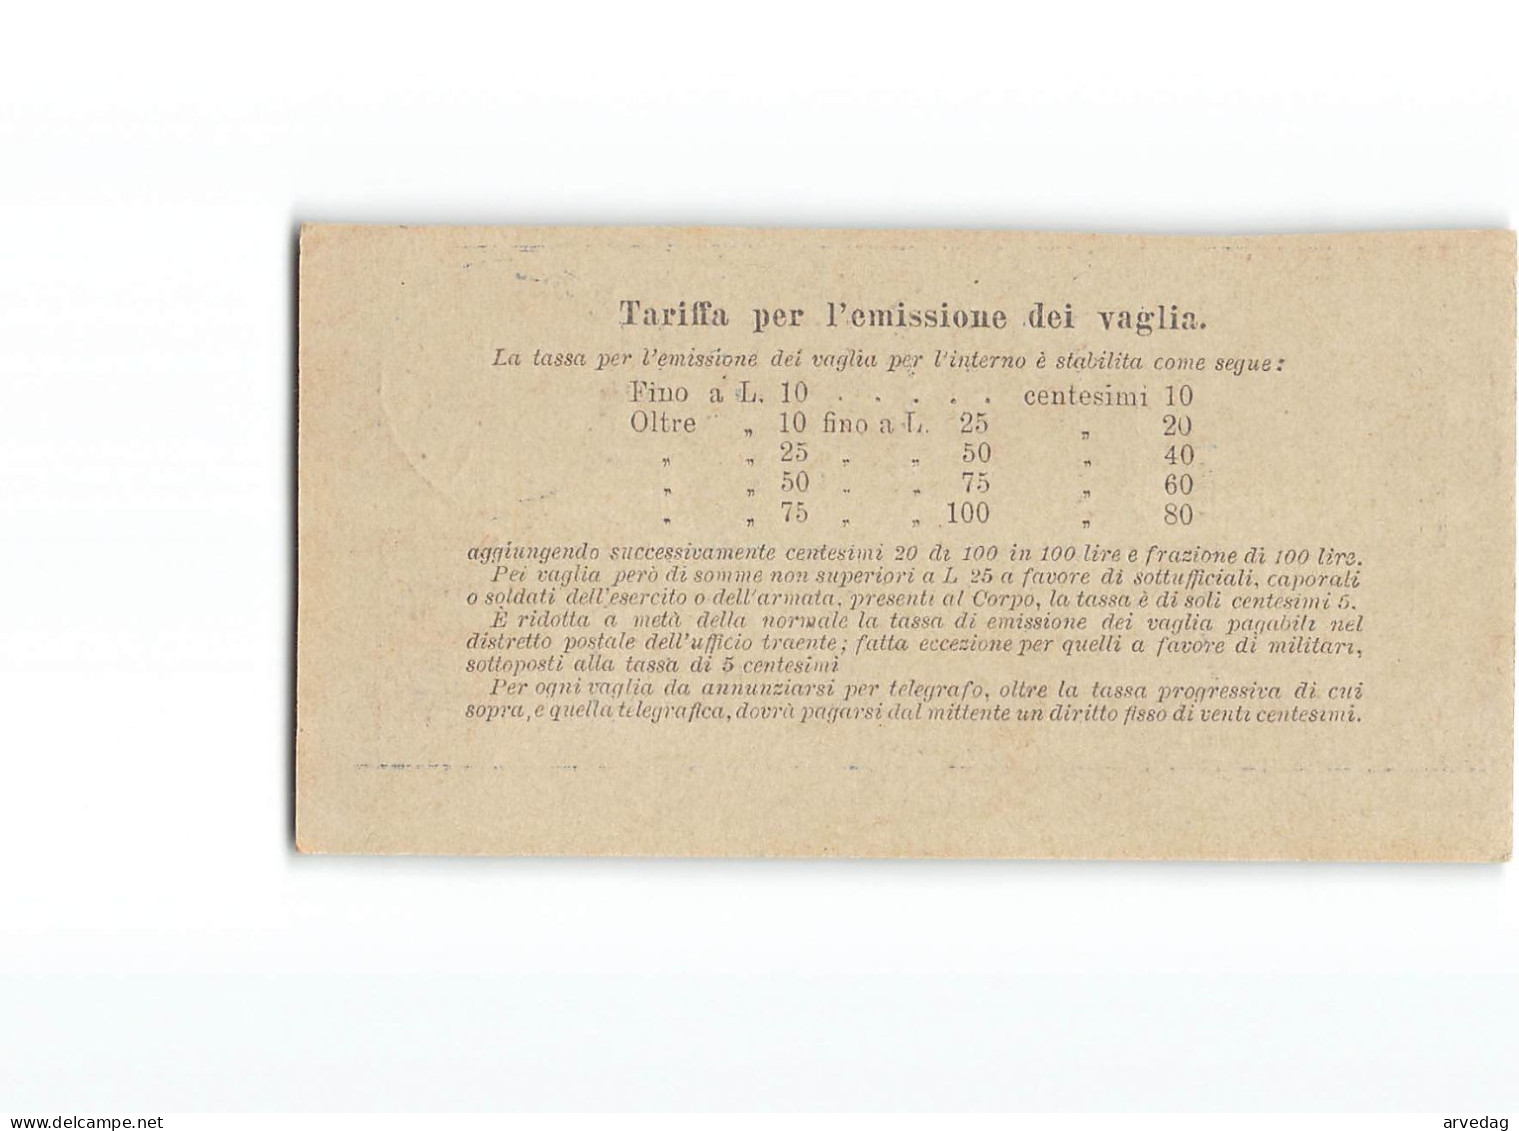 X1291  RICEVUTA VAGLIA BARONISSI X NAPOLI VOMERO 1911 - Tax On Money Orders